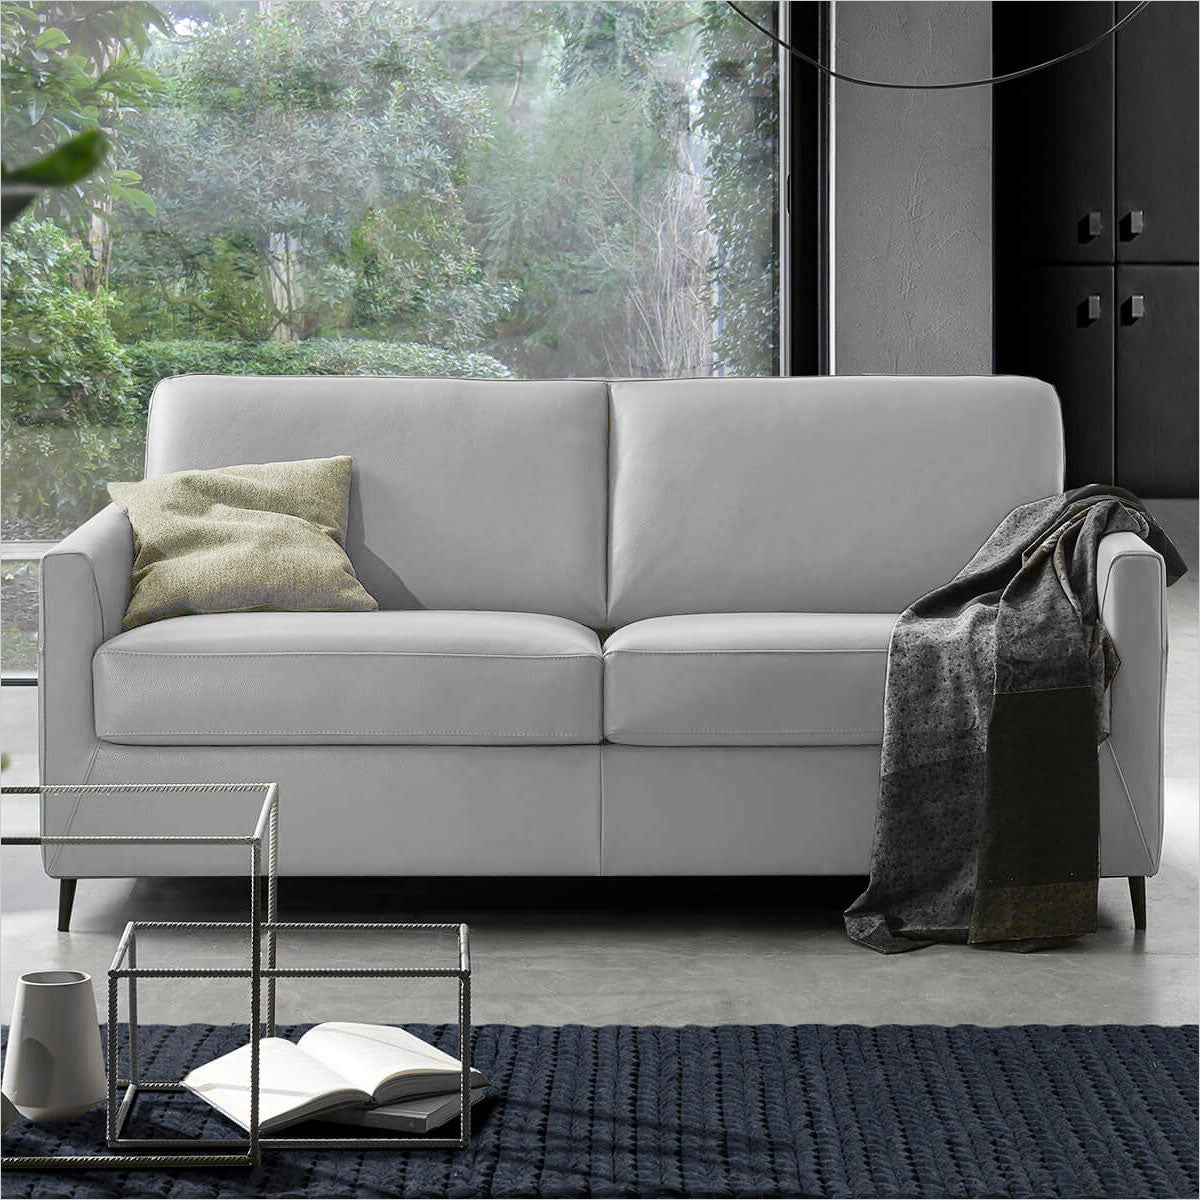 Dejavu Sleeper Sofa Light Grey Leather Scan Design Modern And Contemporary Furniture